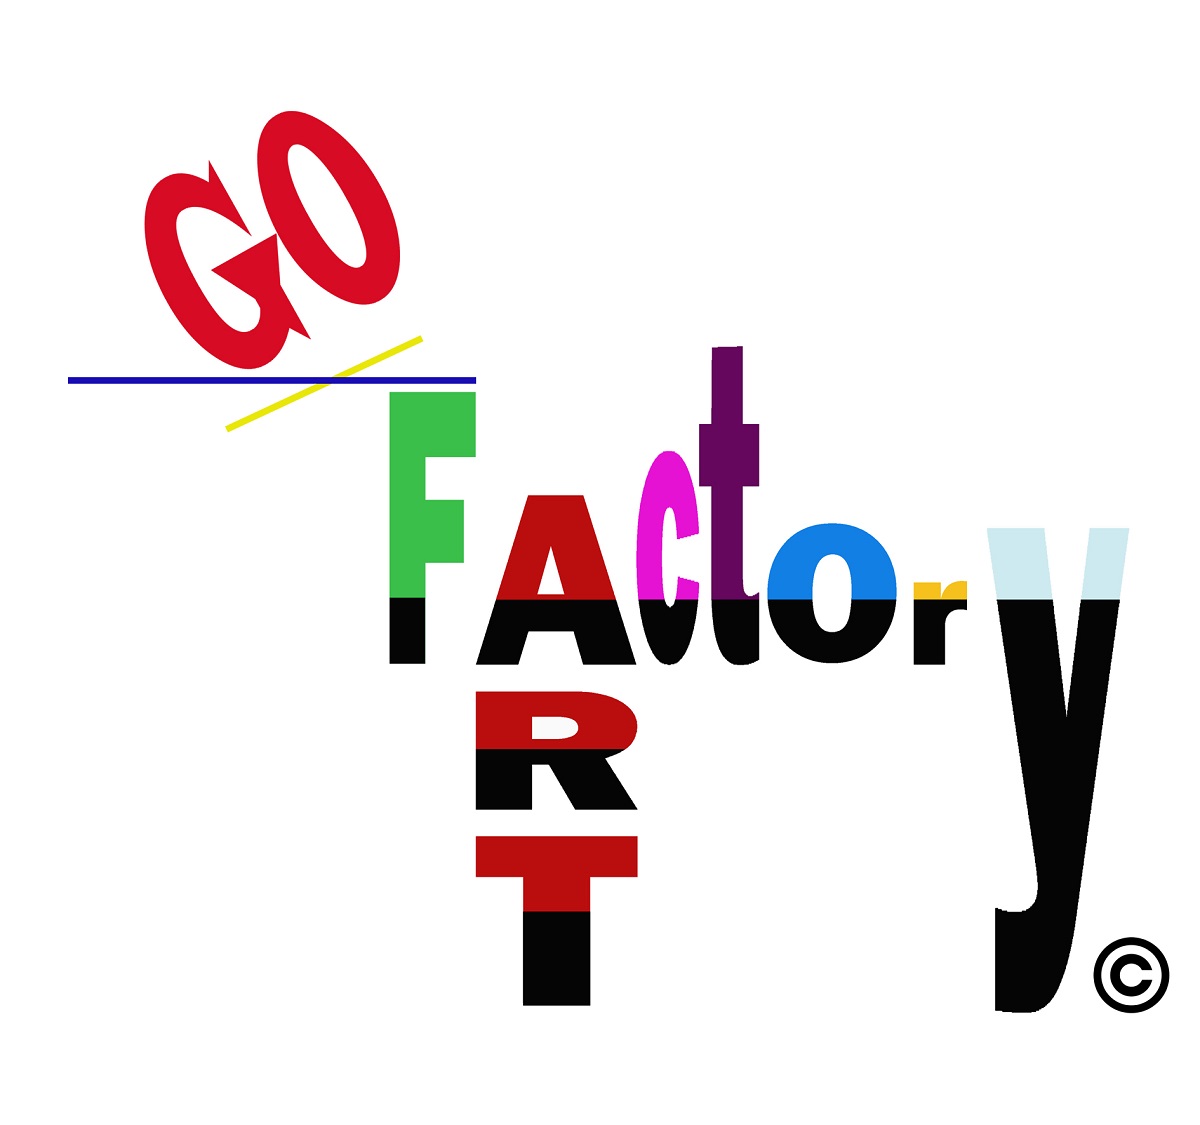 Logogo go art factory